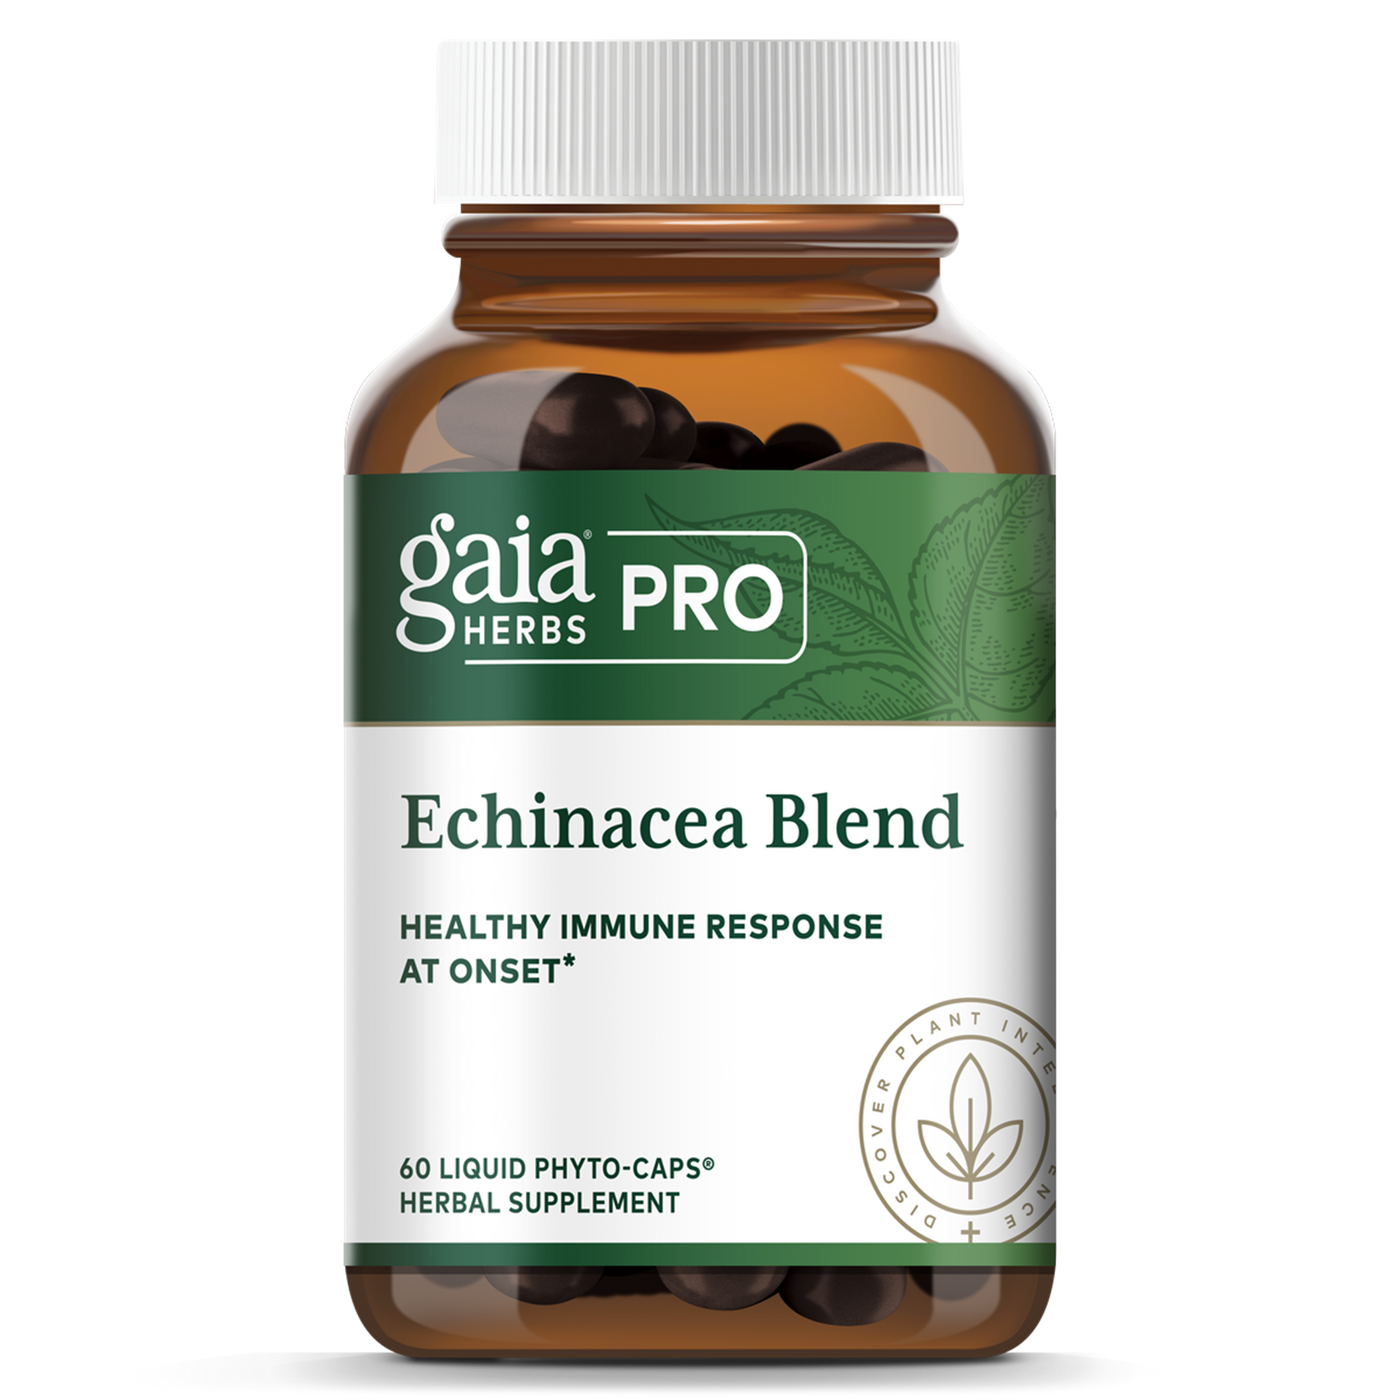 Echinacea Blend  Curated Wellness